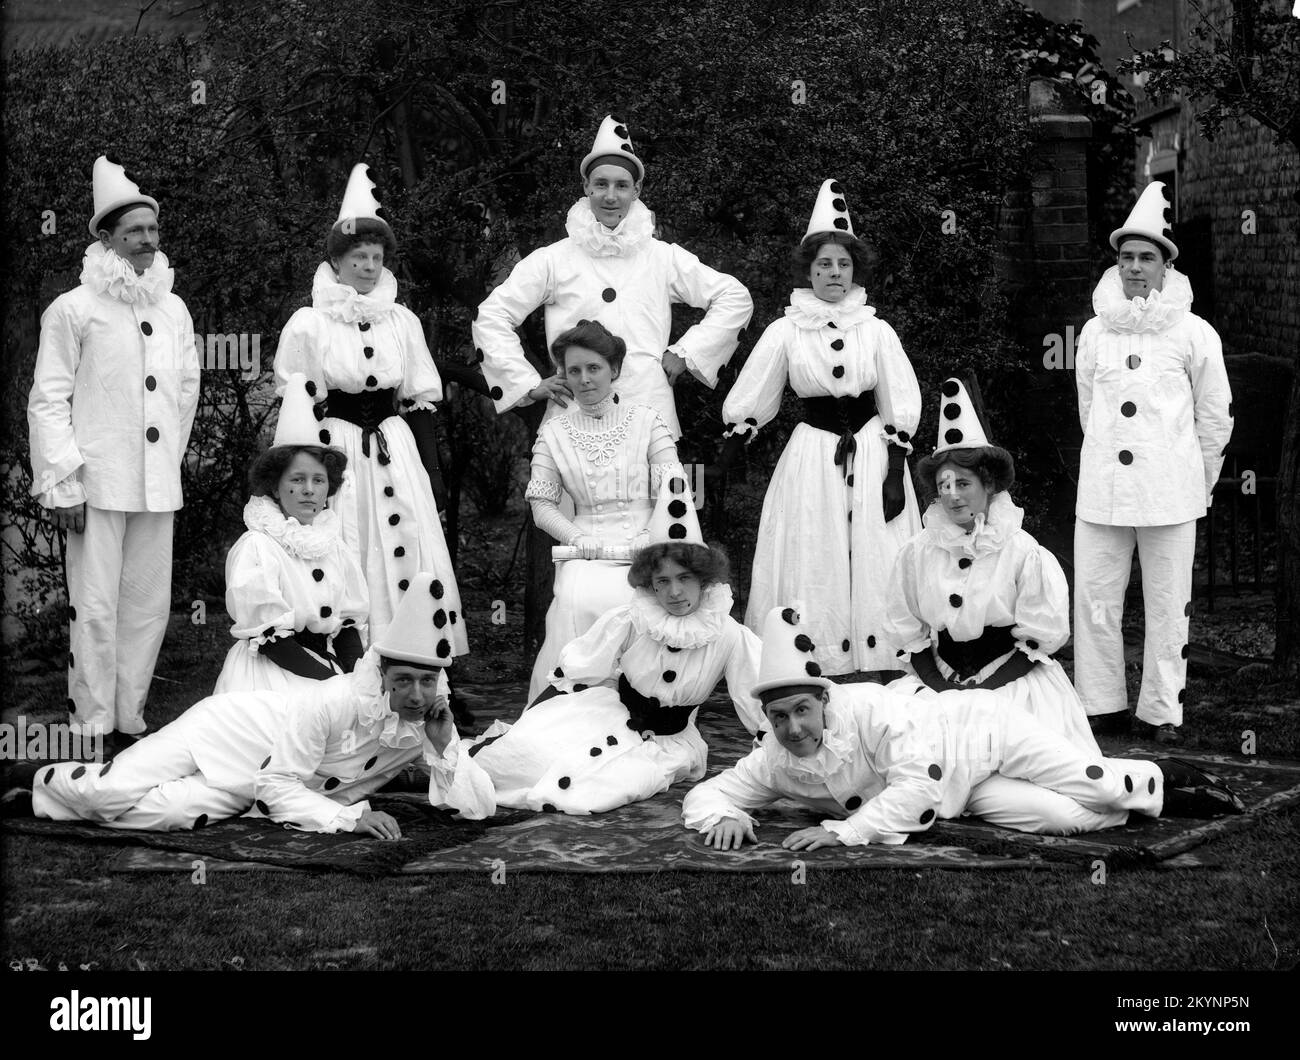 Pierrot clowns in full costume. England, Uk 1905 Stock Photo